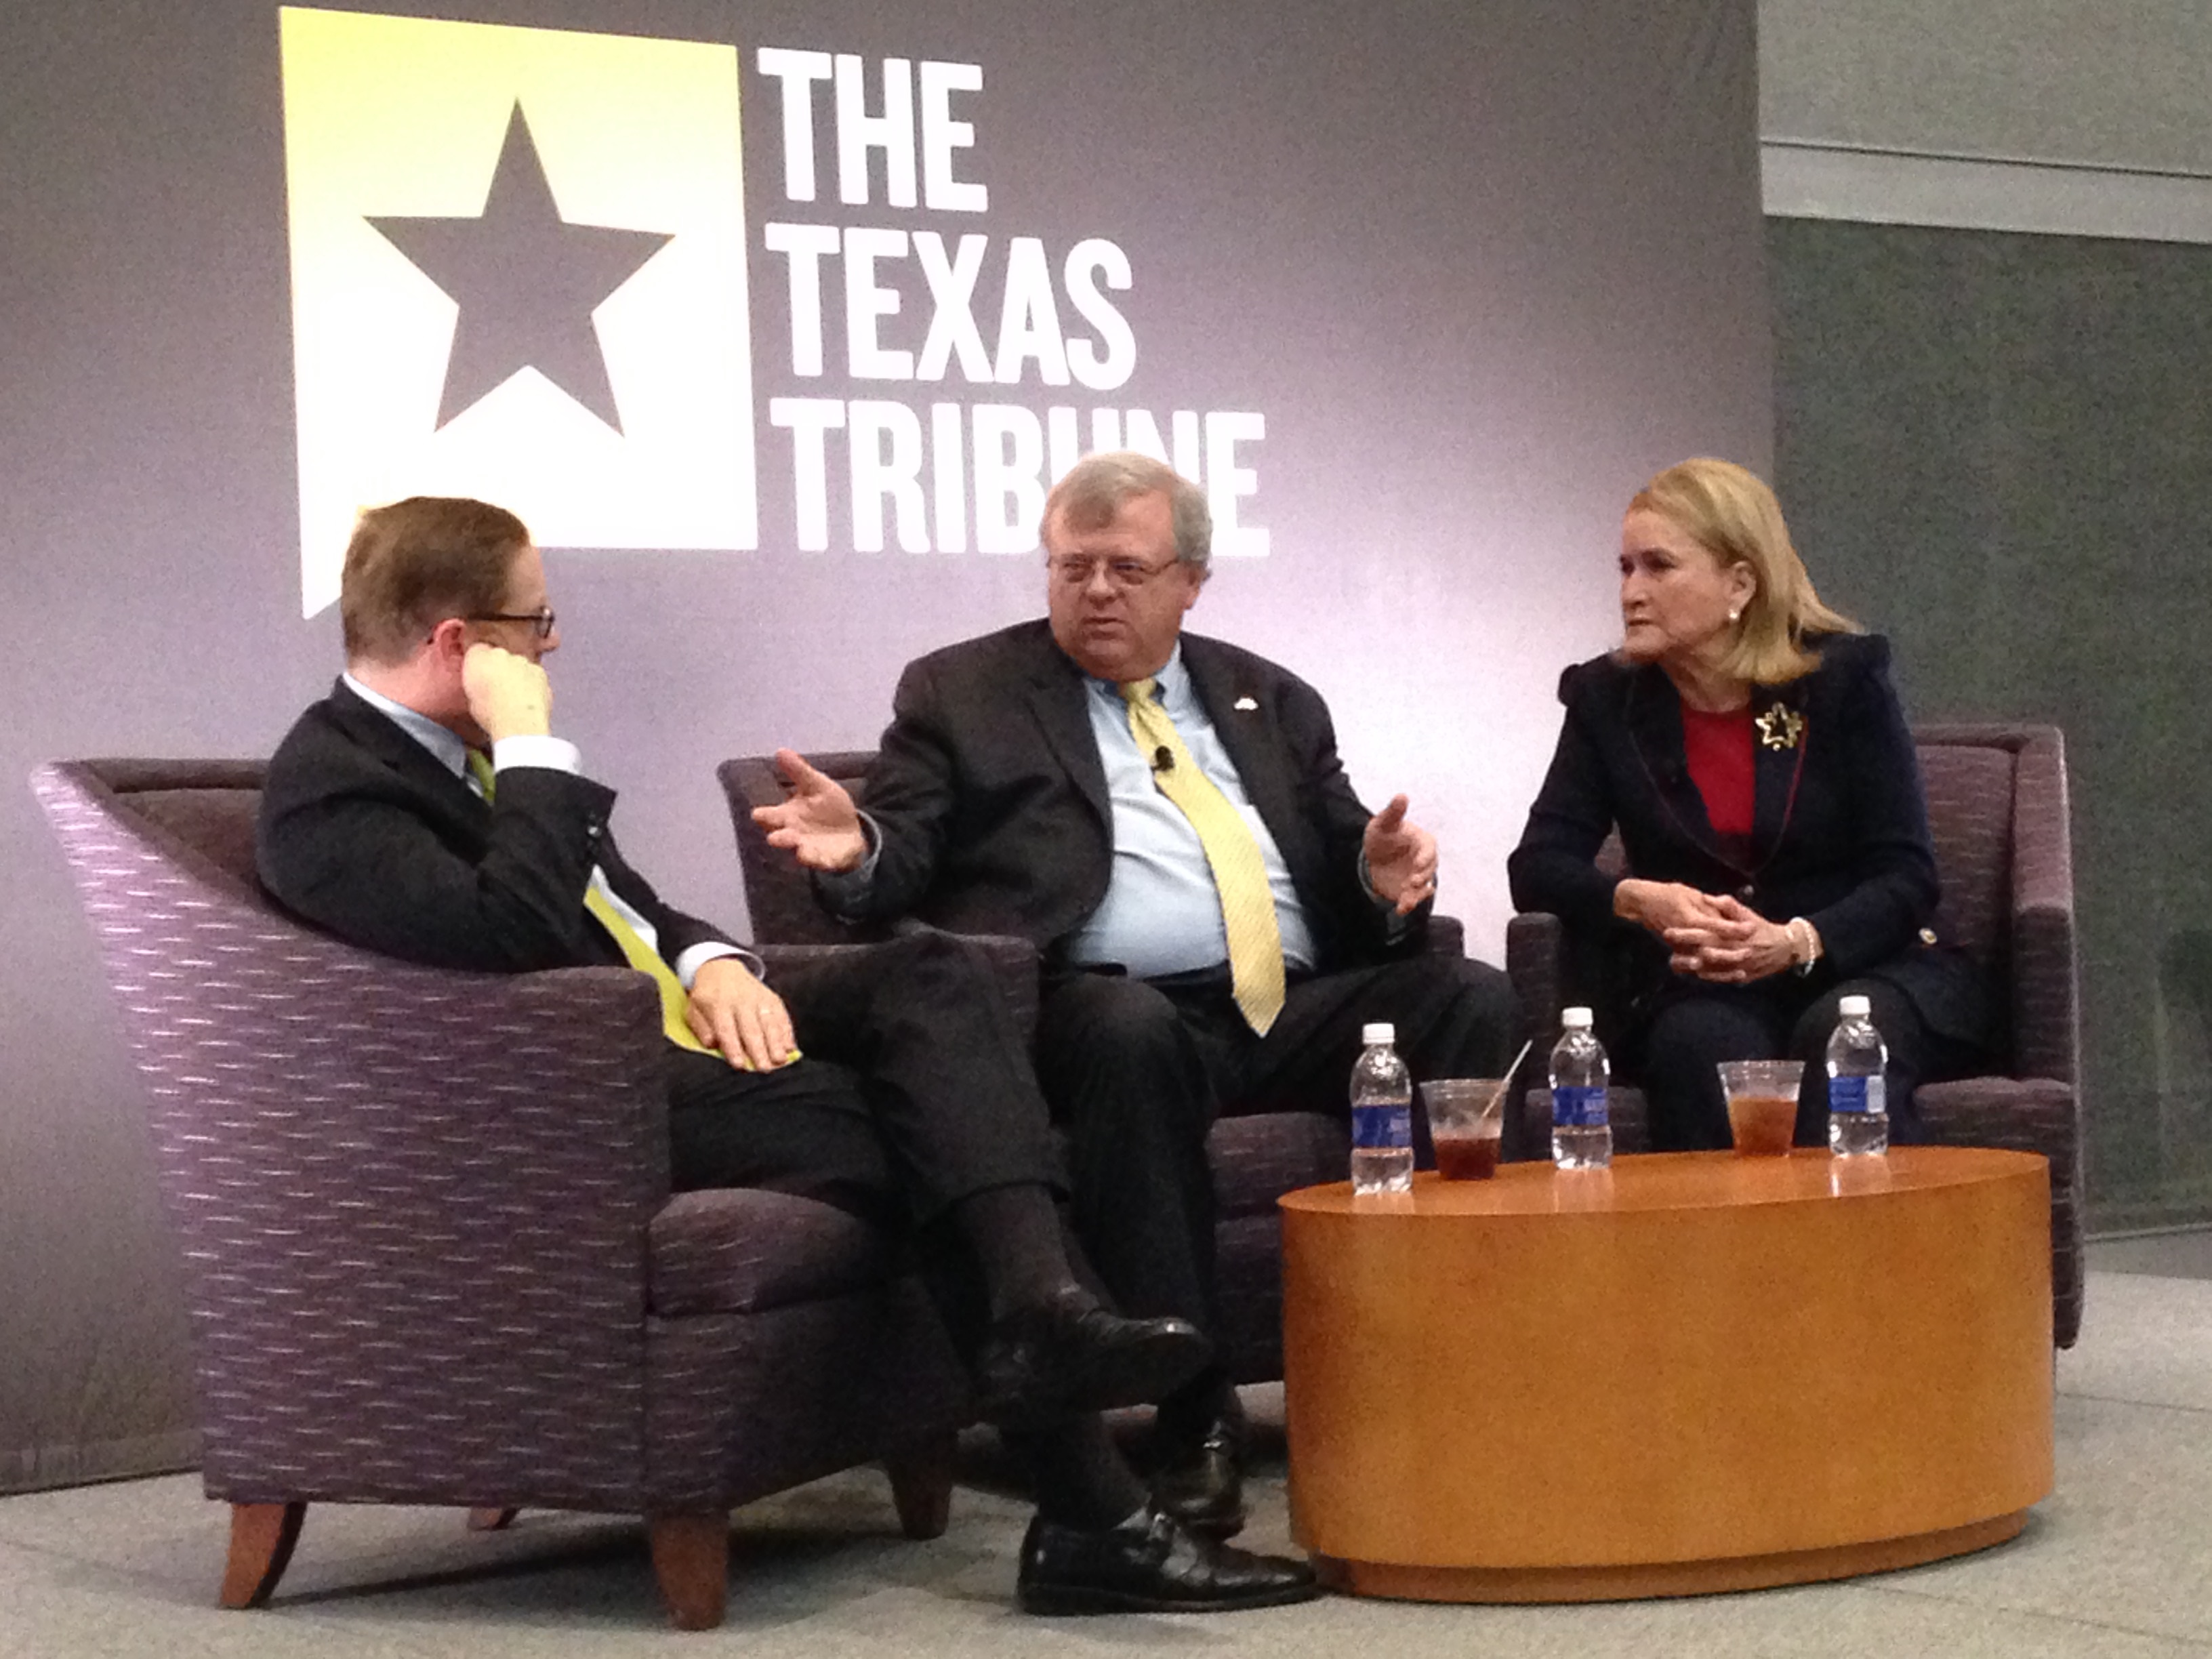 From left to right: Evan Smith, Editor-In-Chief of the Texas Tribune, Texas Senator Paul Bettencourt and Texas Senator Sylvia Garcia during the "Houston & The Legislature" forum.